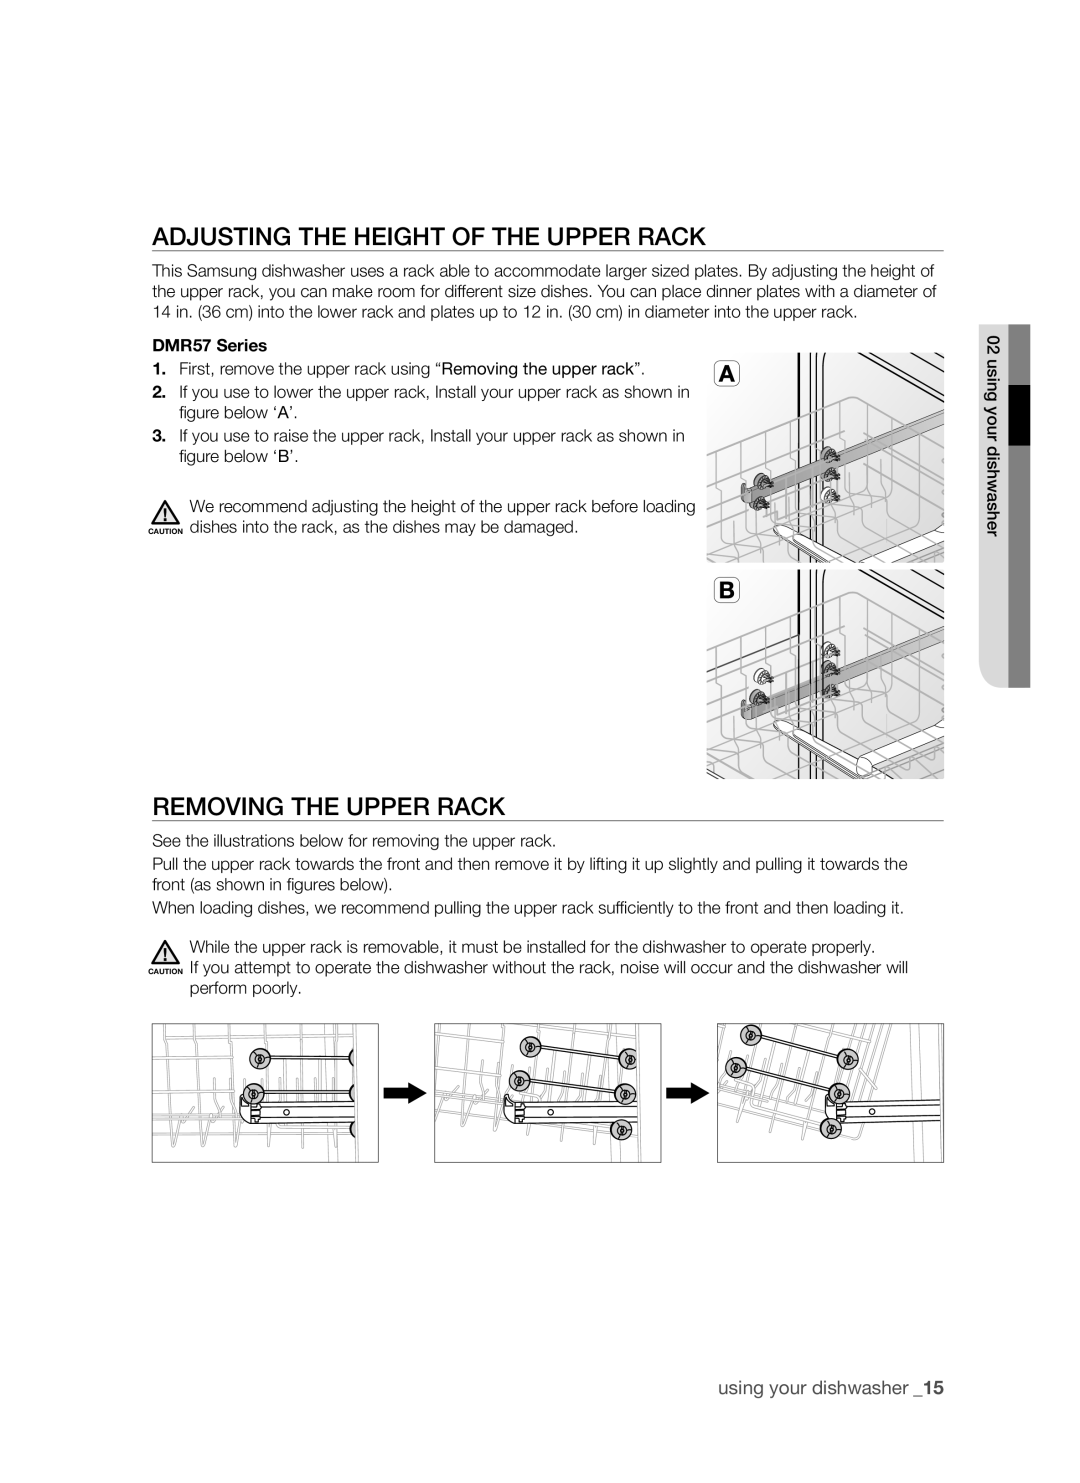 Samsung DMR57LHS Adjusting the height of the upper rack, Removing the upper rack, using your dishwasher, DMR57 Series 